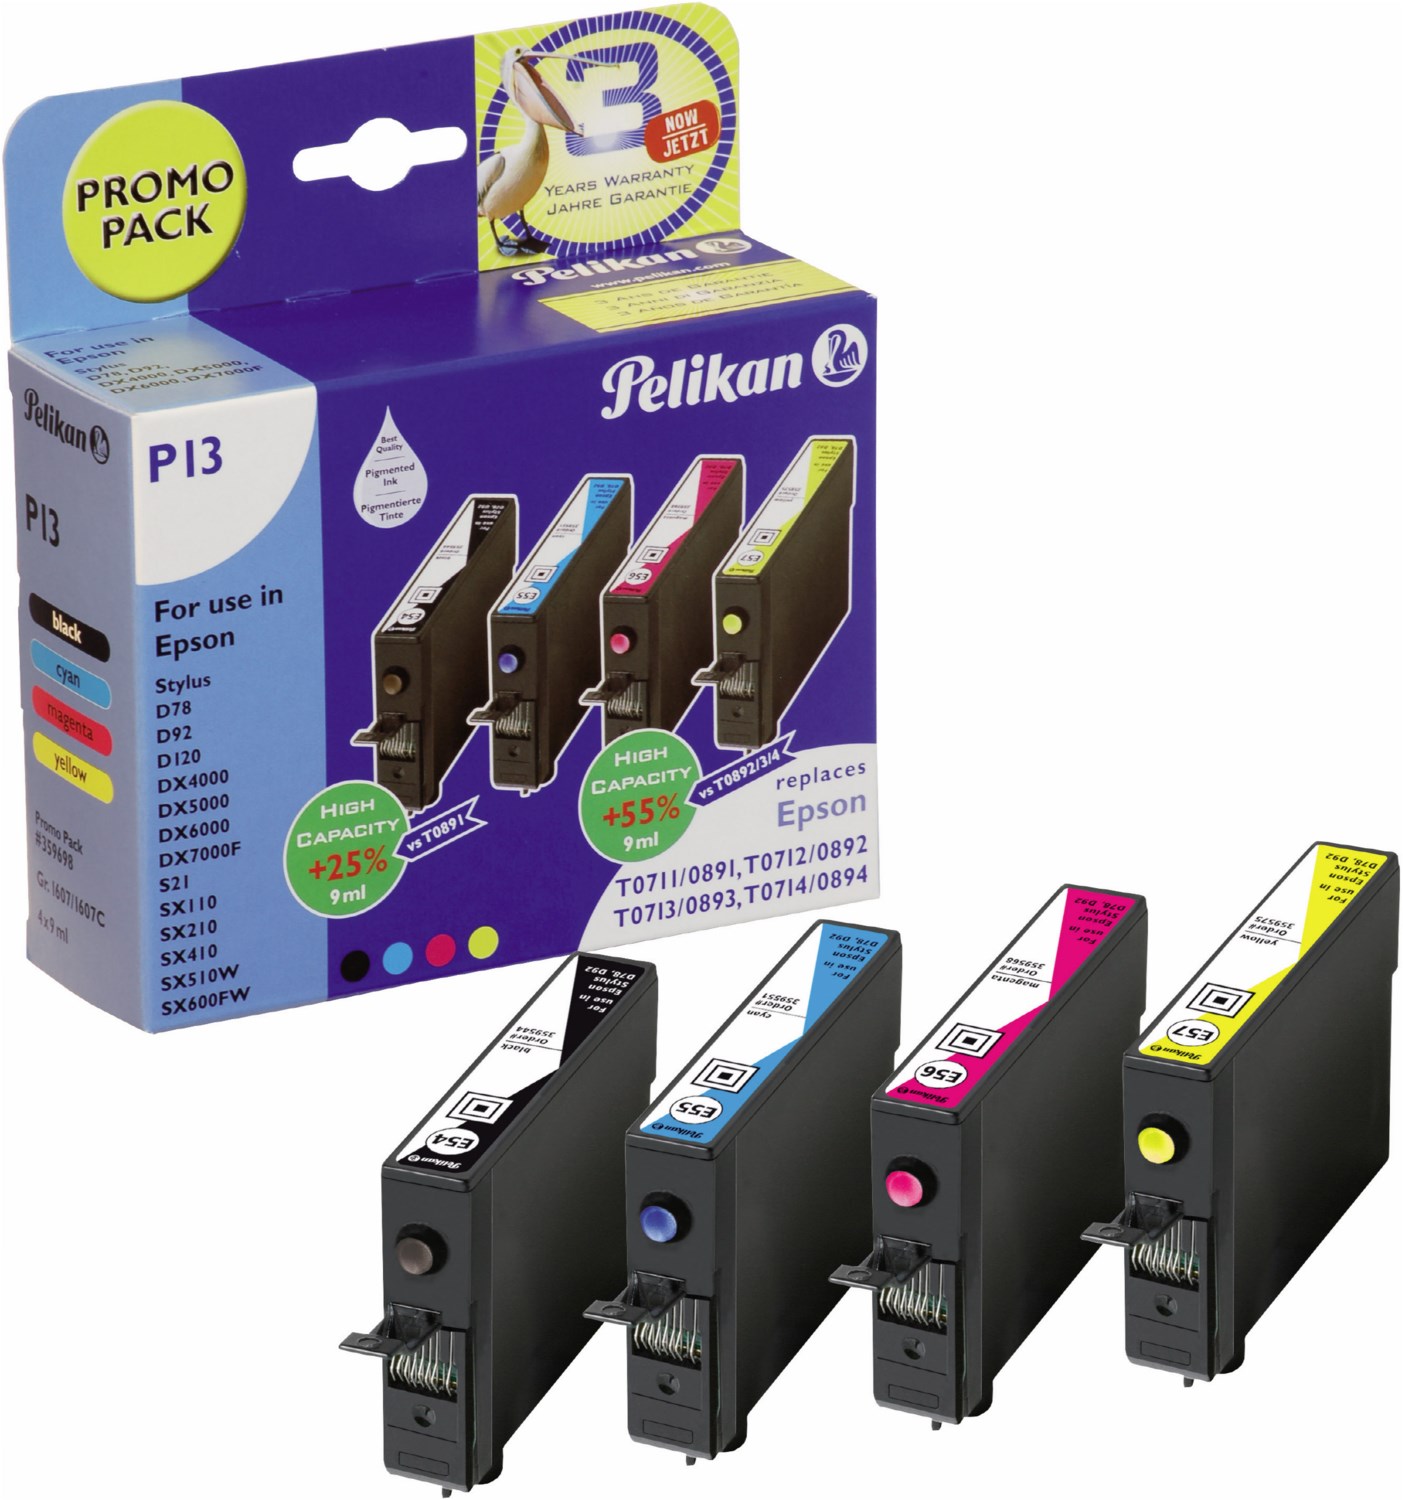 P13 Tinten-Multipack ersetzt Epson T07154010 4-farbig von Pelikan